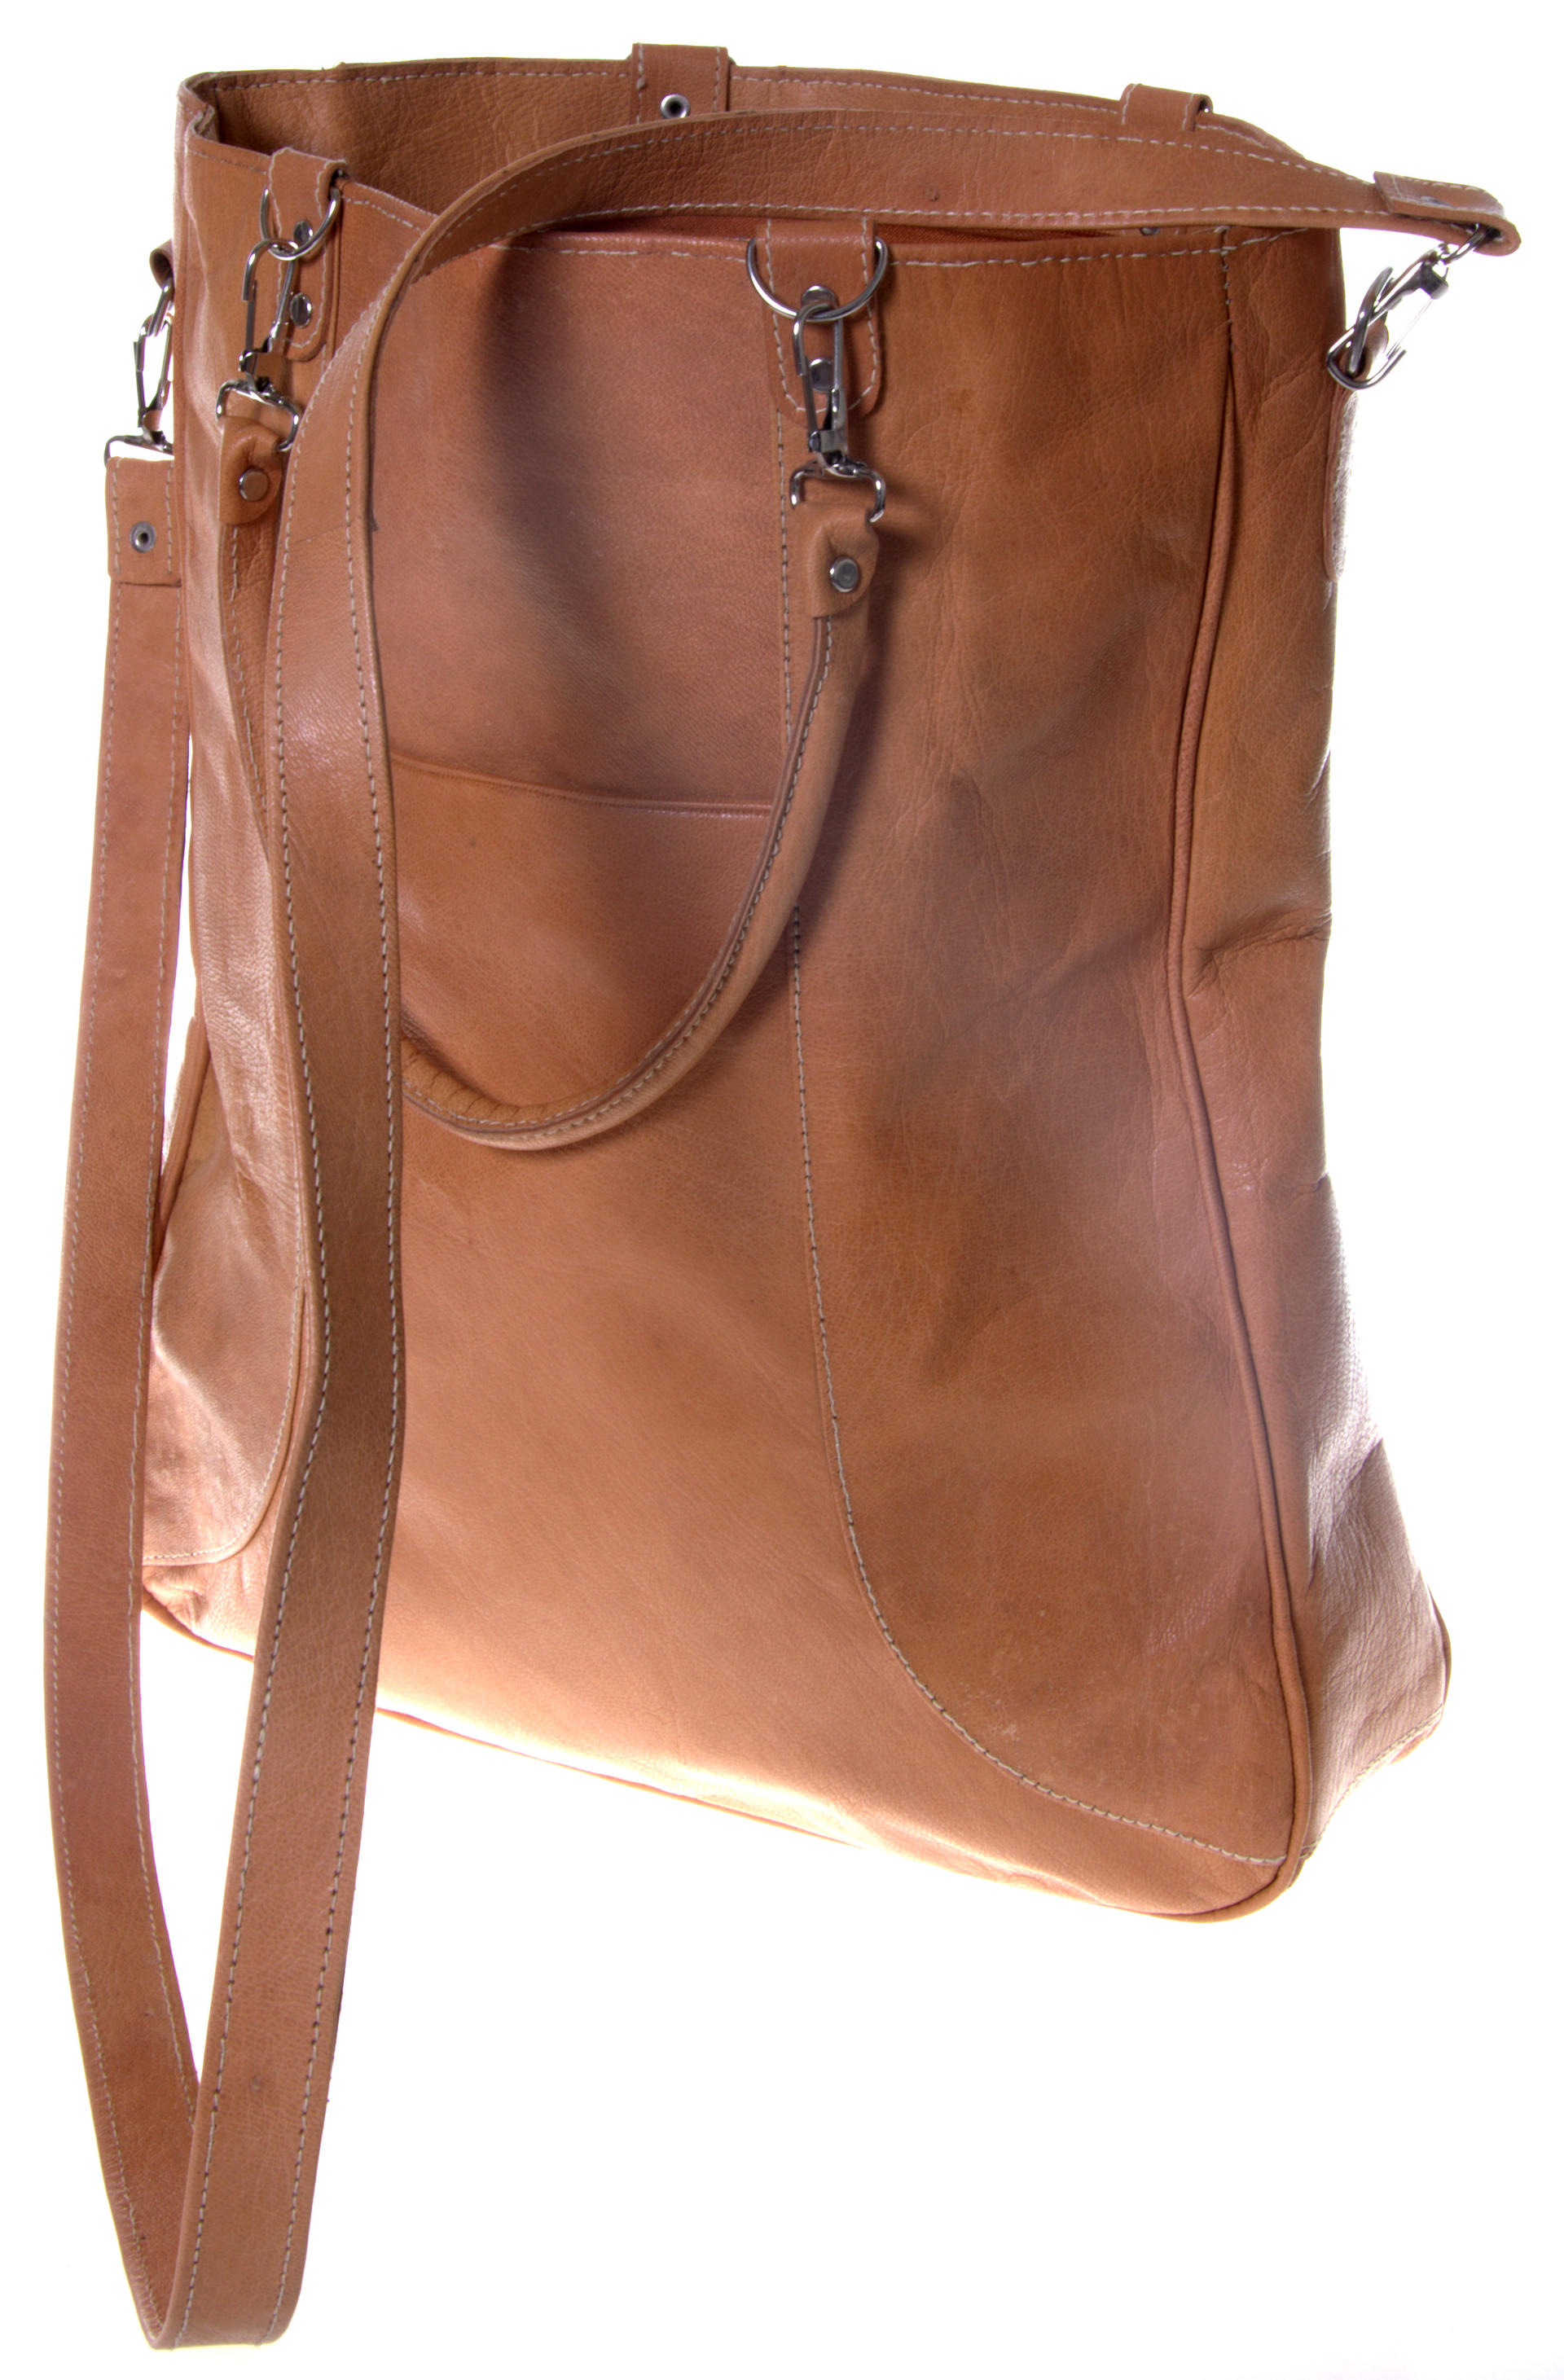 Sharif Handbags Hand-Painted Leather Crossbody Bag w/ Removable